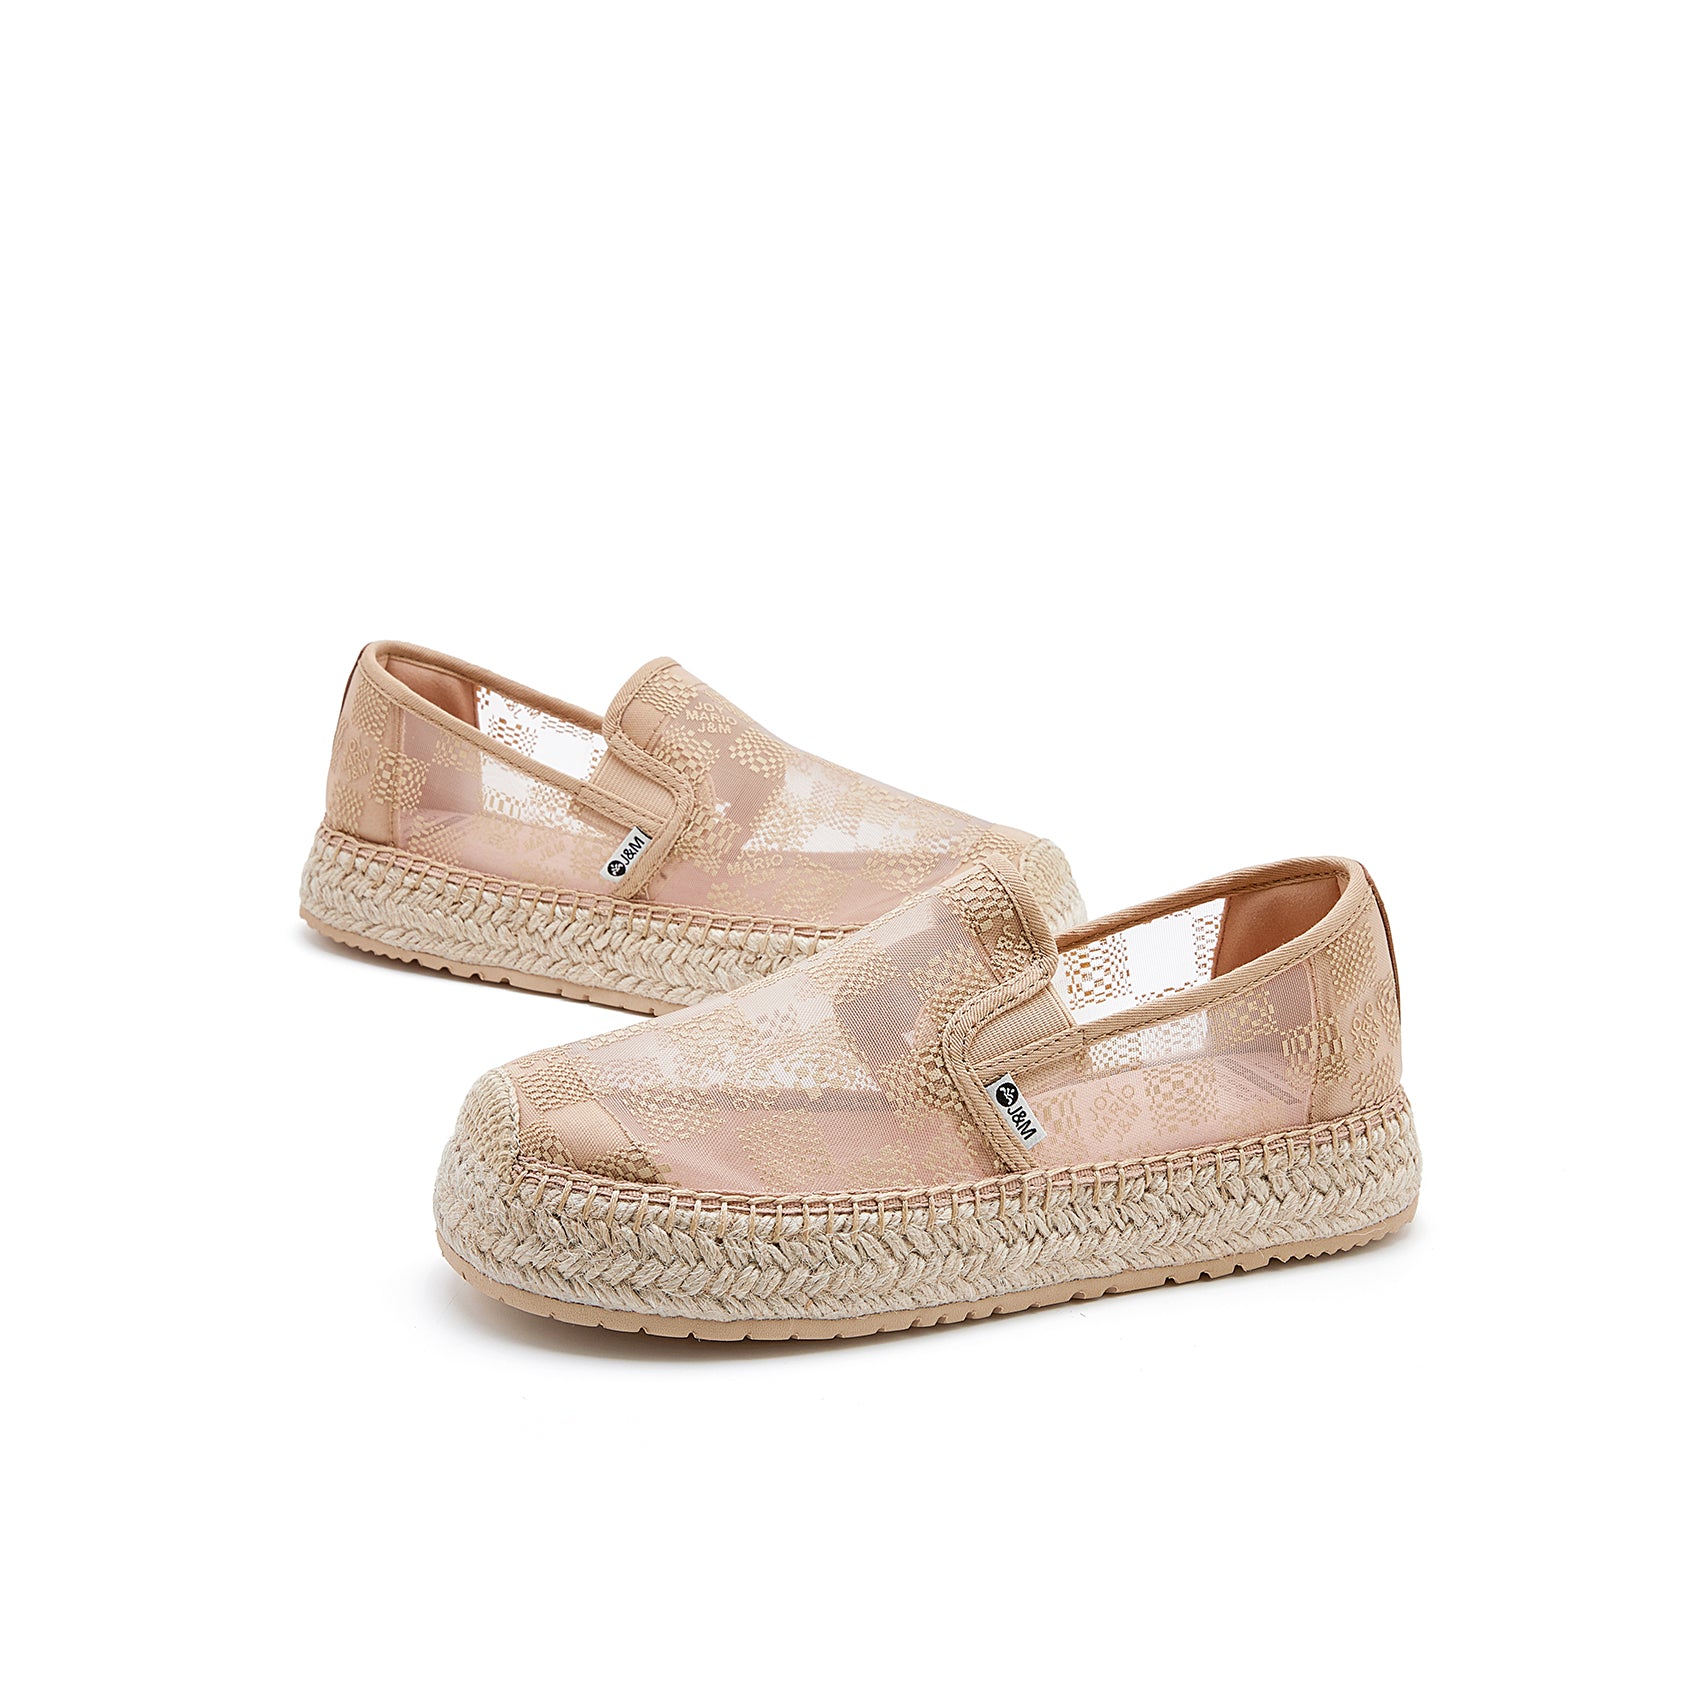 JOY&MARIO Handmade Women’s Slip-On Espadrille Mesh Loafers Flats in Apricot-05382W